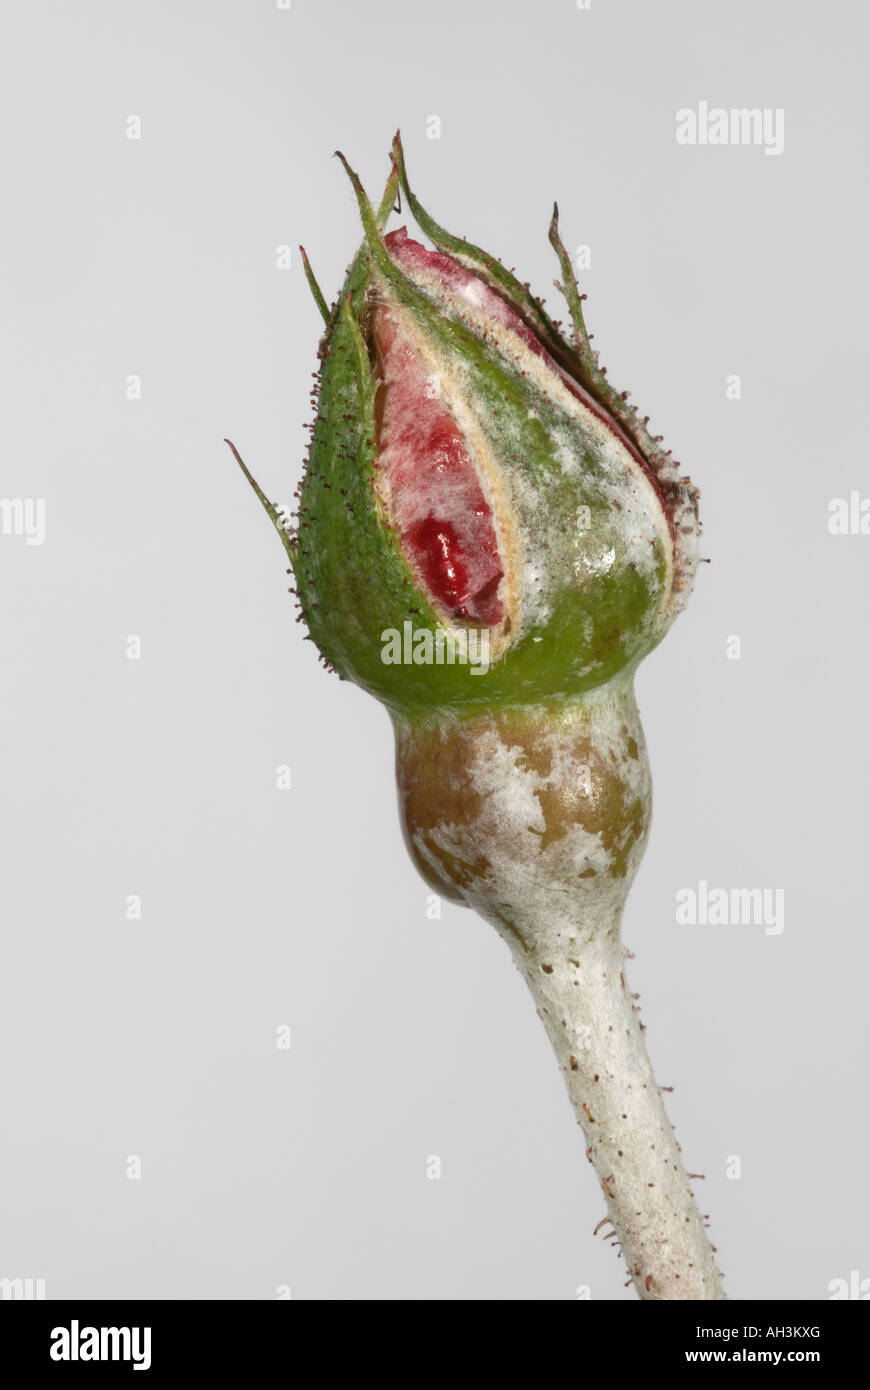 Powdery mildew (Podosphaera pannosa) on rose bud Stock Photo